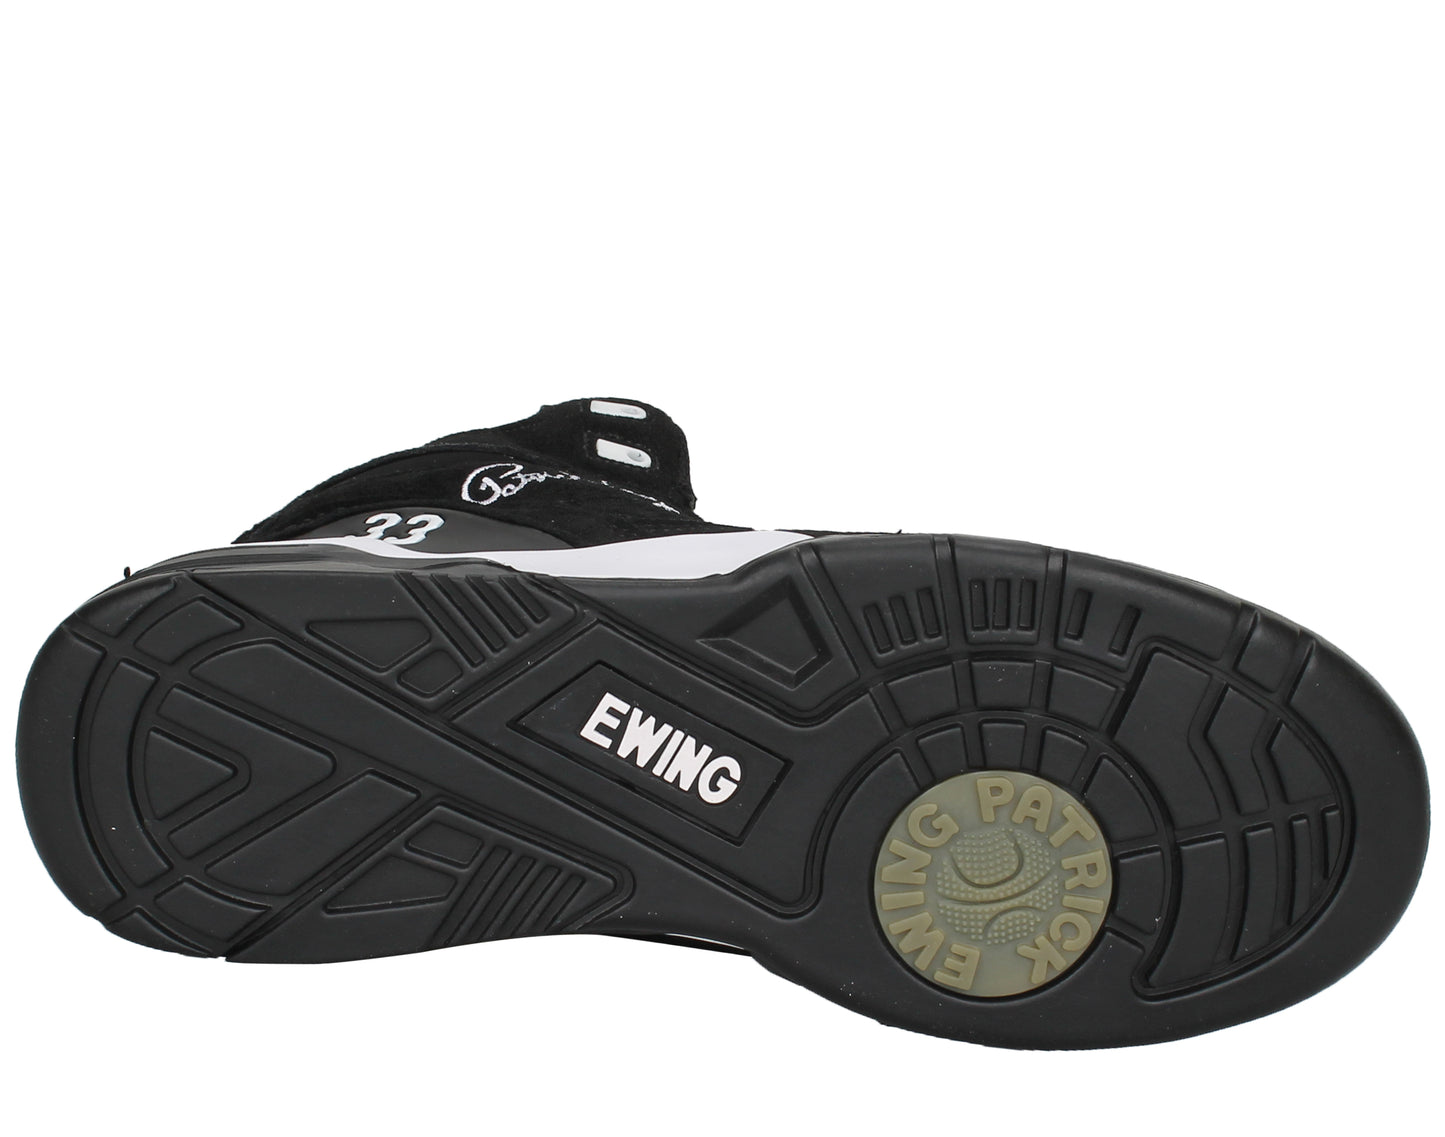 Ewing Athletics Ewing Guard Men's Basketball Shoes